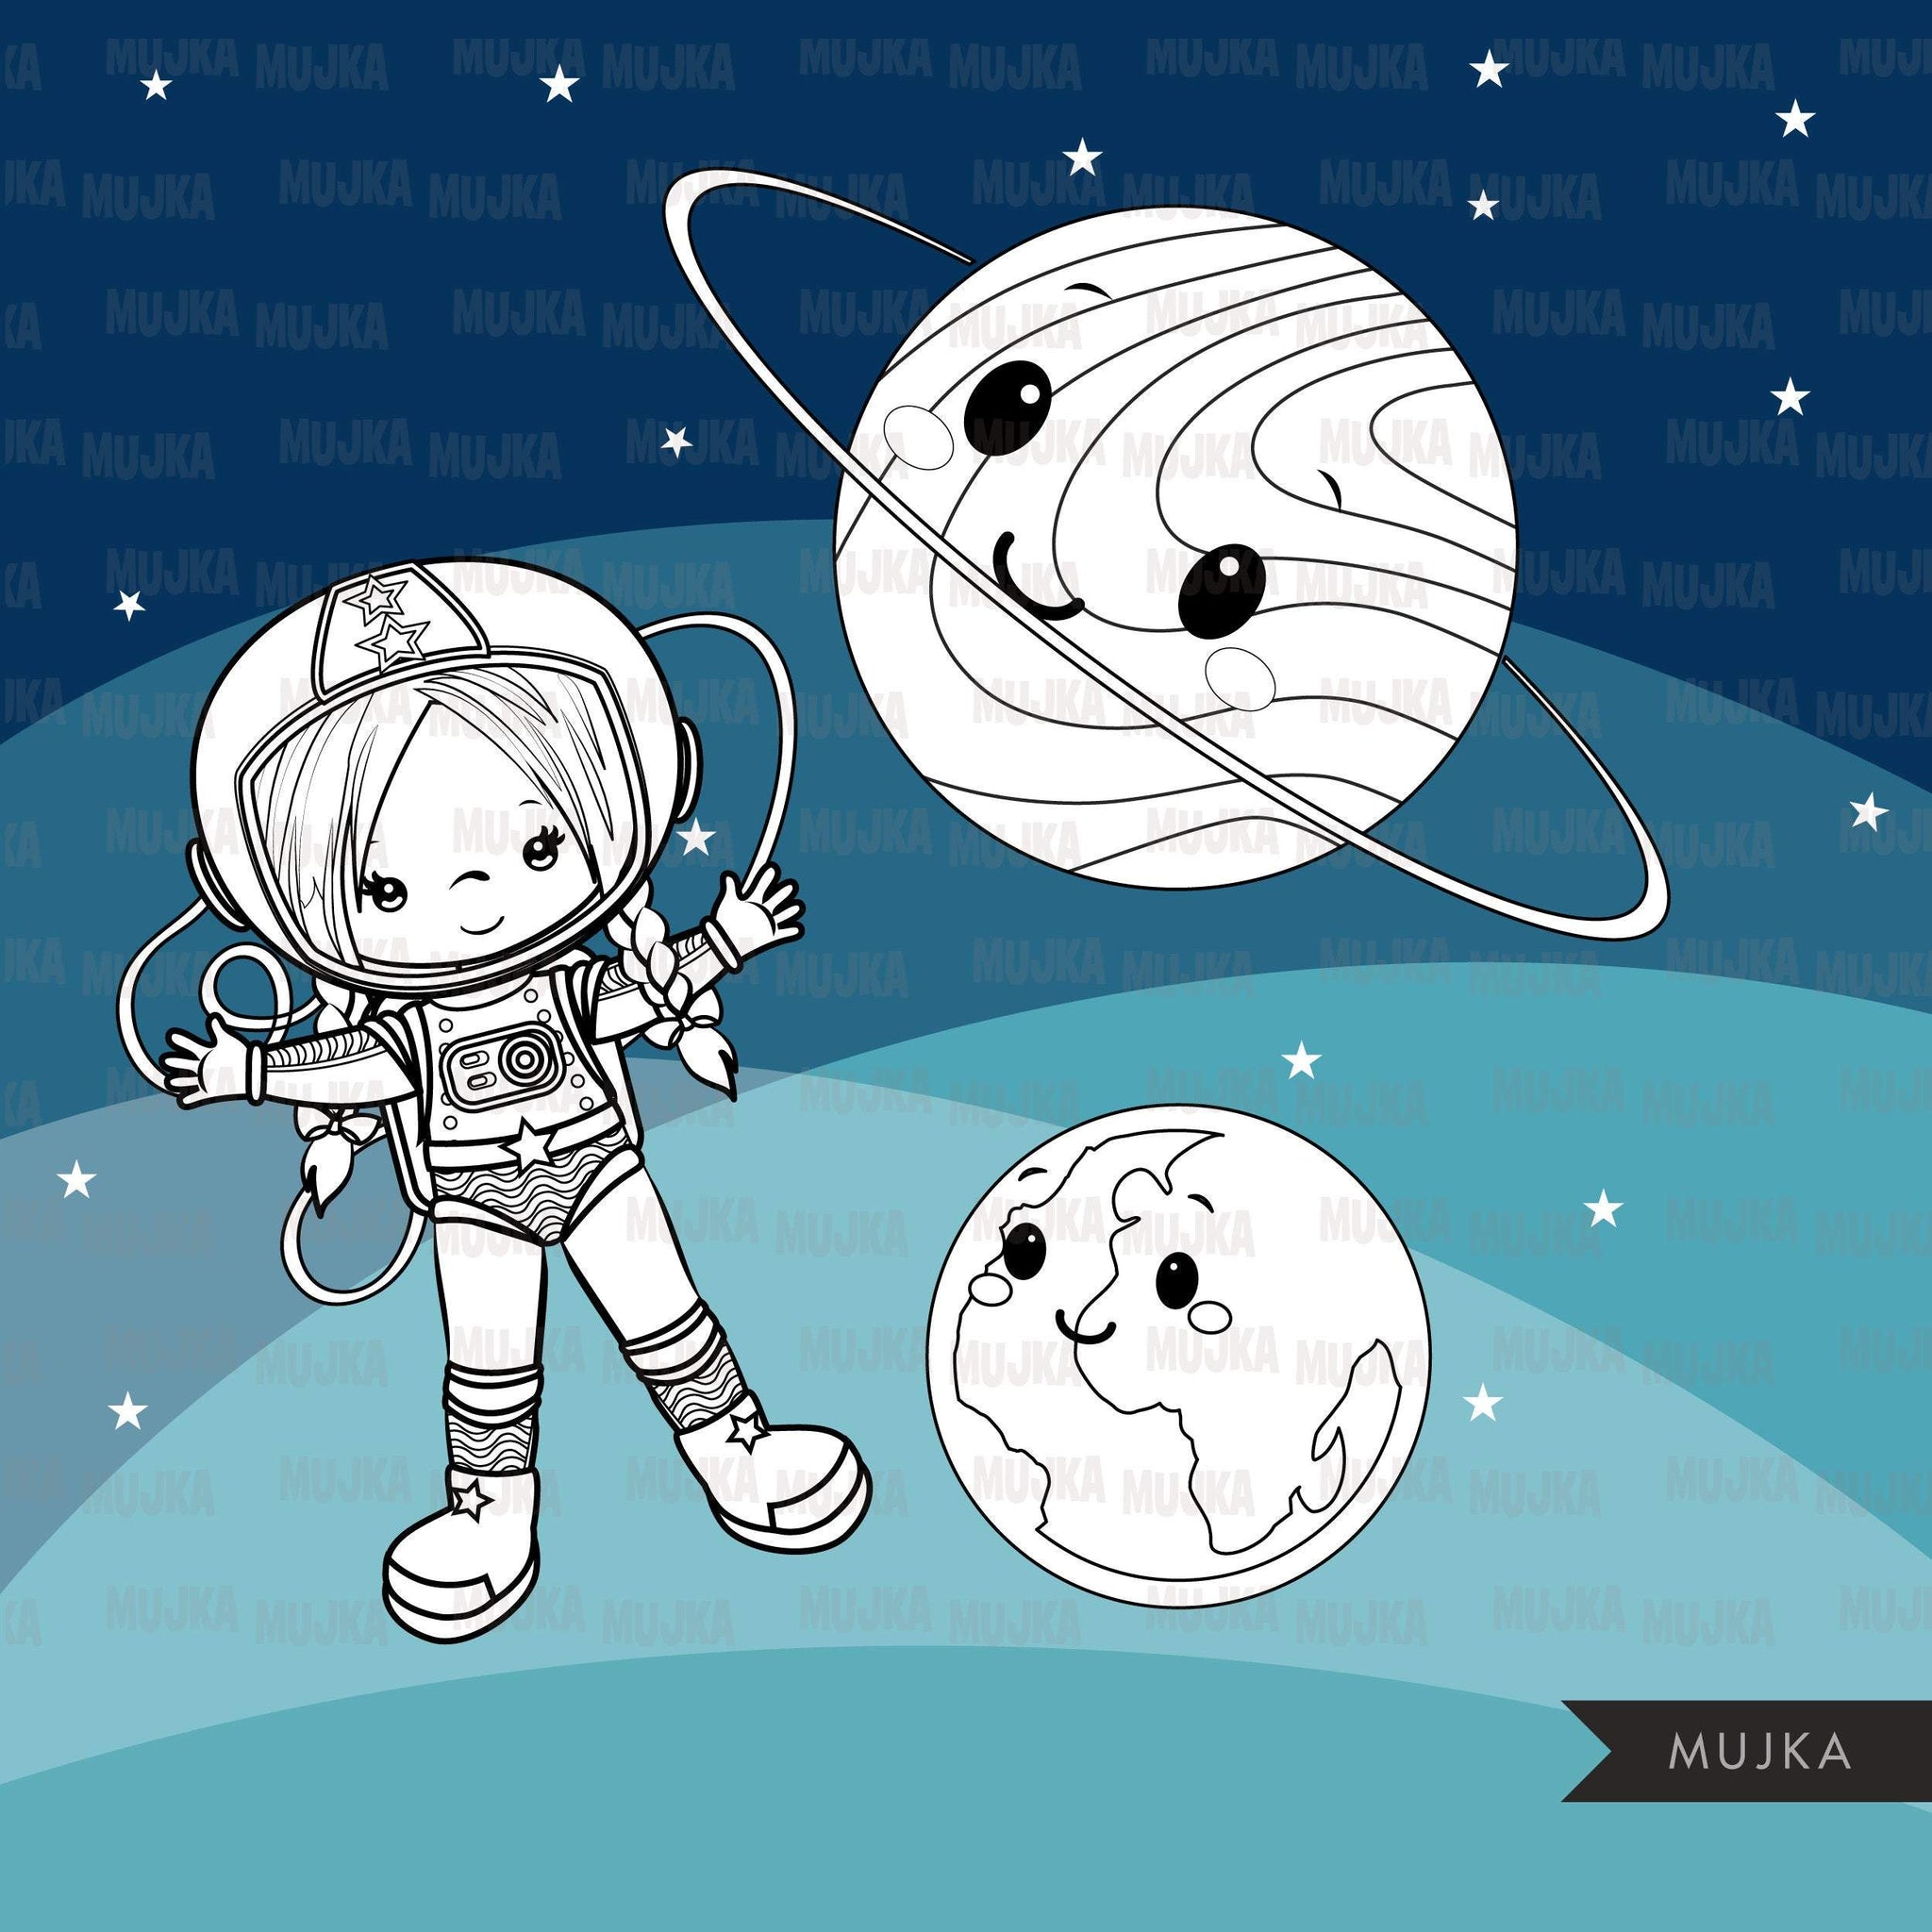 astronauts planet saturn